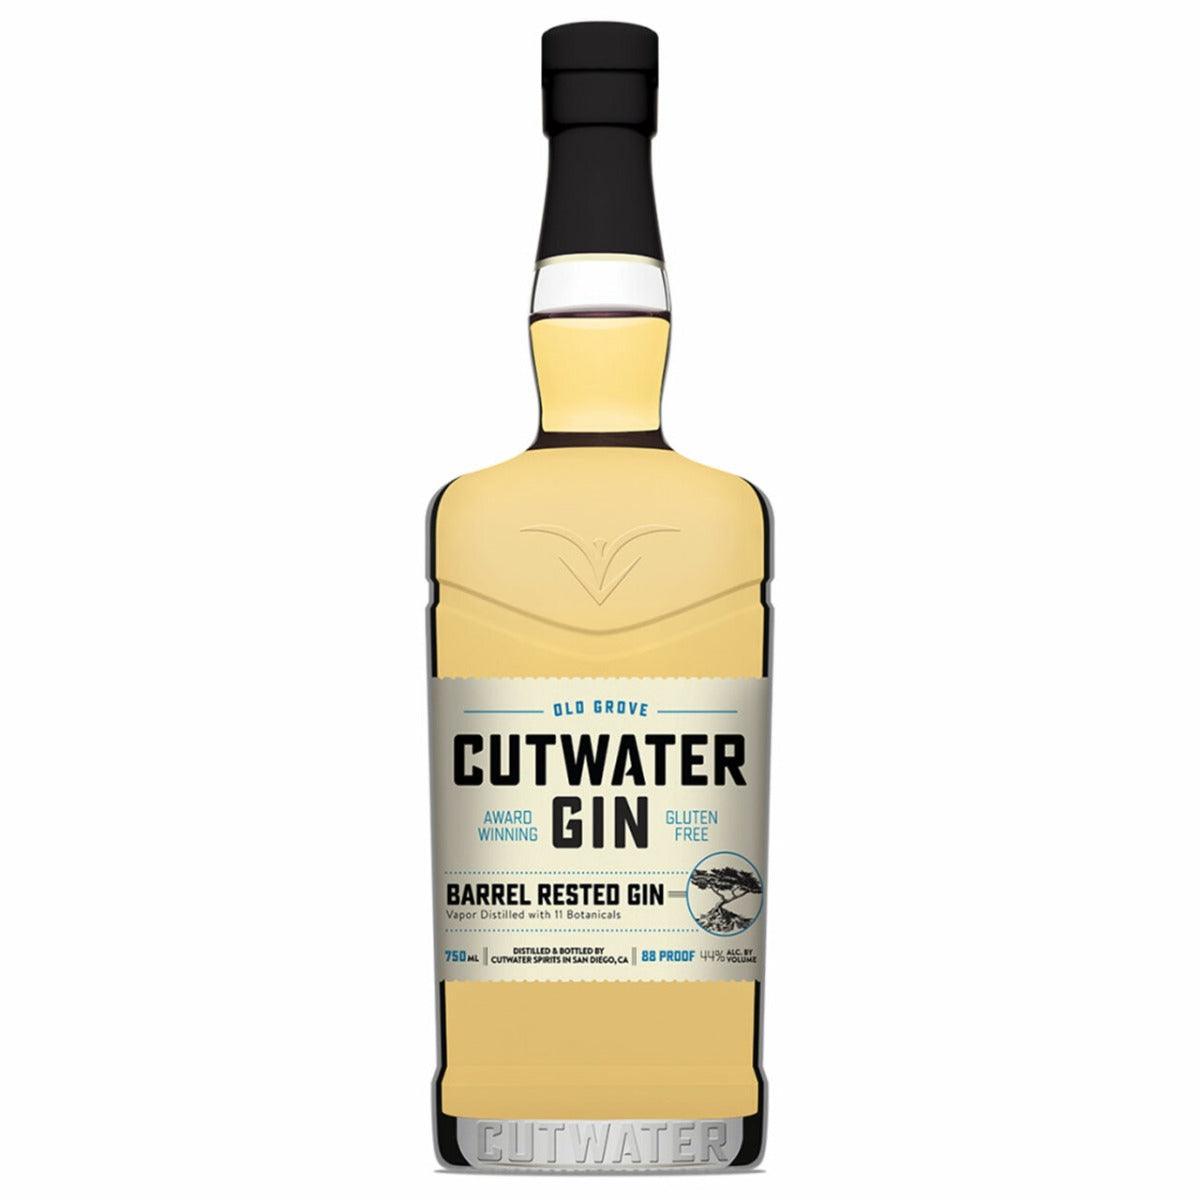 CUTWATER OLD GROVE BARREL RESTED GIN CALIFORNIA 750ML - Remedy Liquor